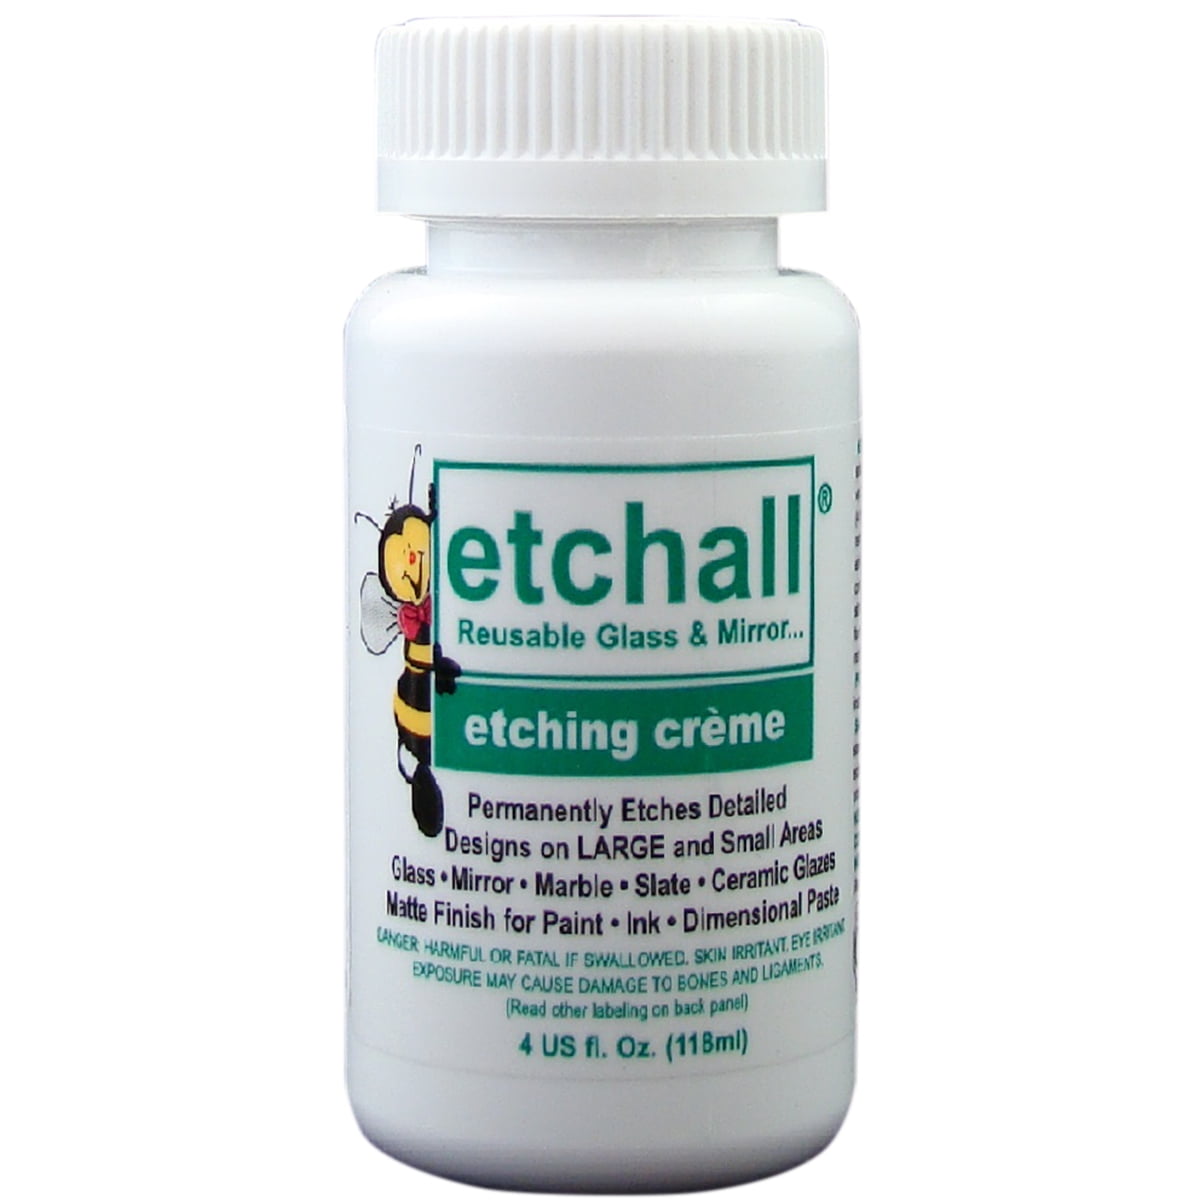 EtchAll Glass Etching Creme - 4 oz.